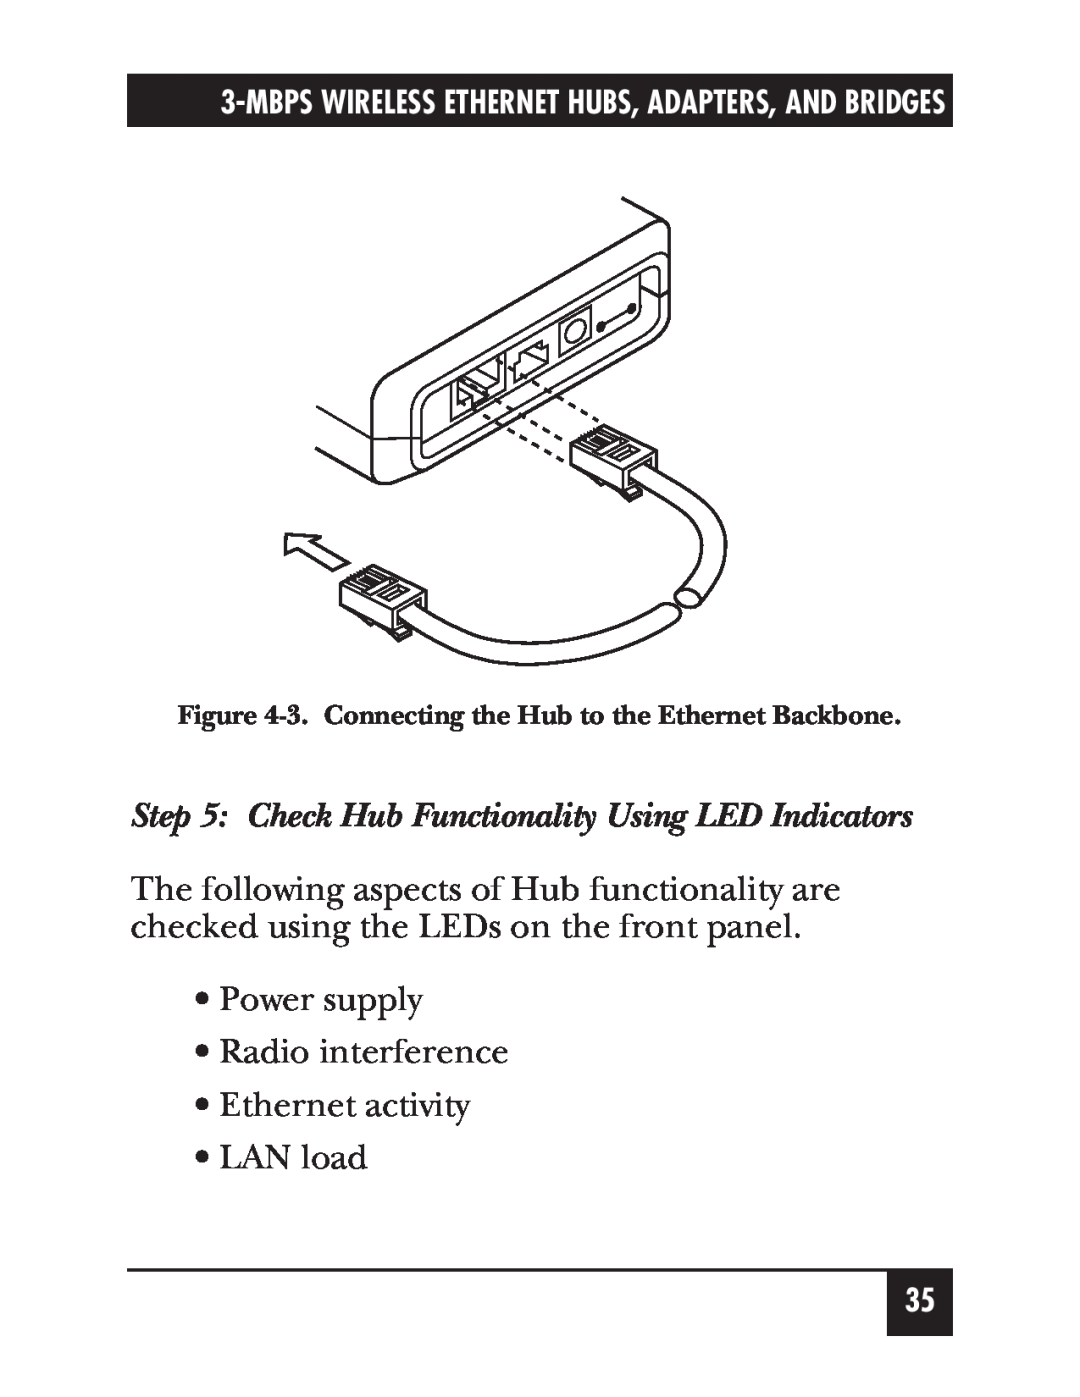 Black Box LW010A Check Hub Functionality Using LED Indicators, Power supply Radio interference Ethernet activity LAN load 